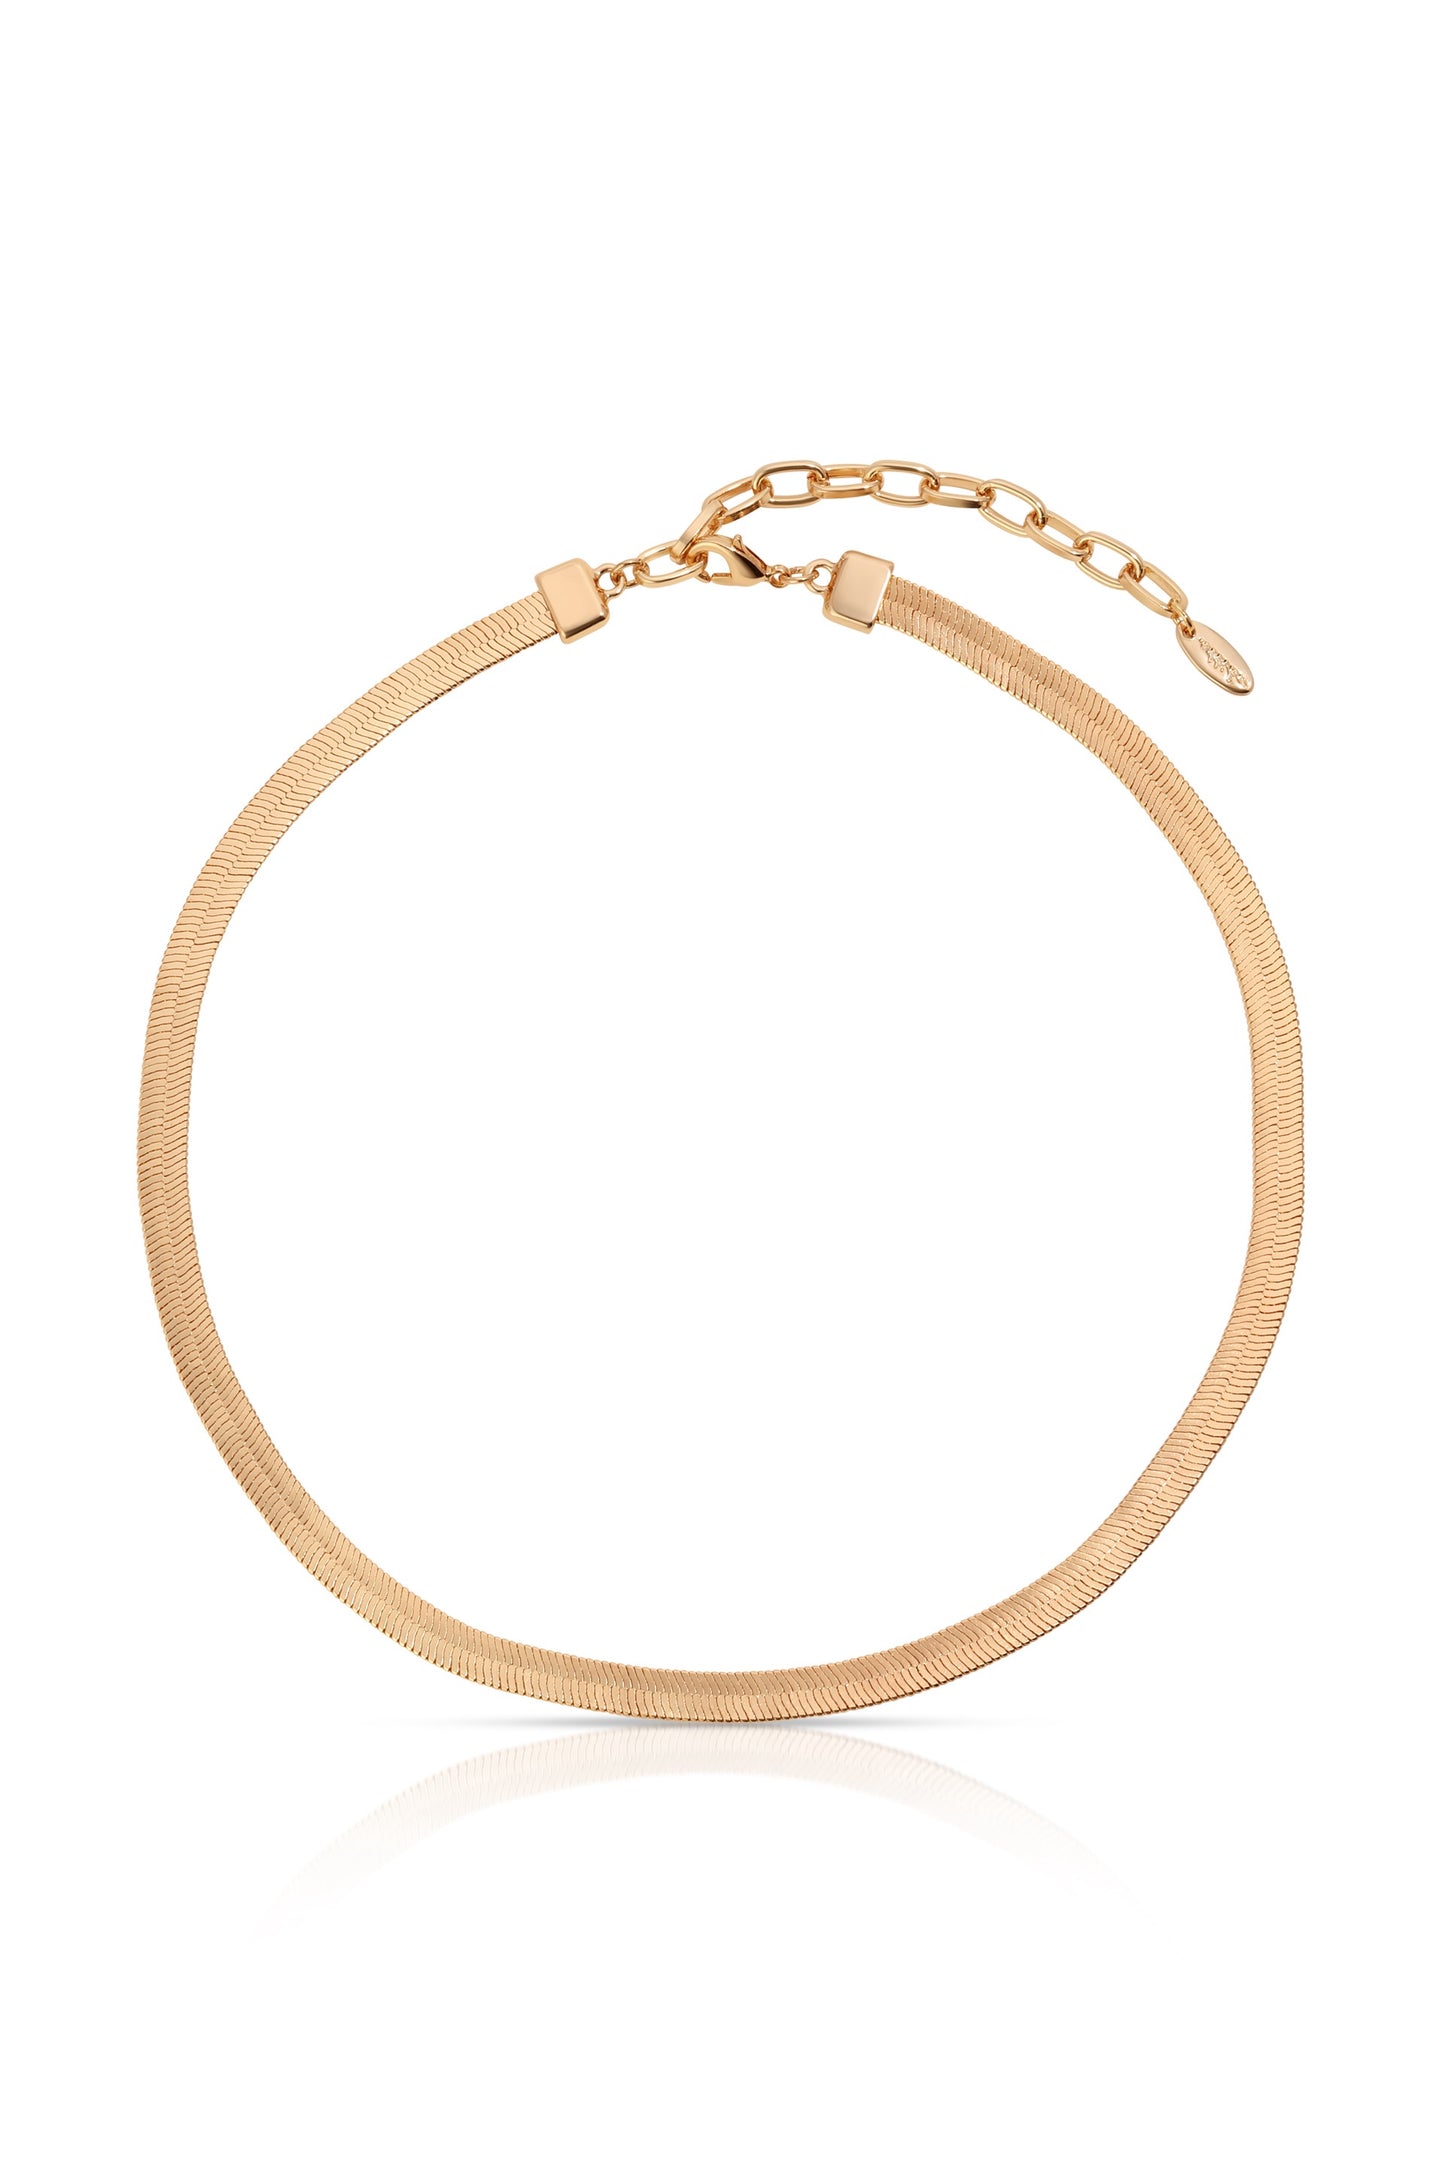 Brooklyn Flat Herringbone Chain Necklace in gold